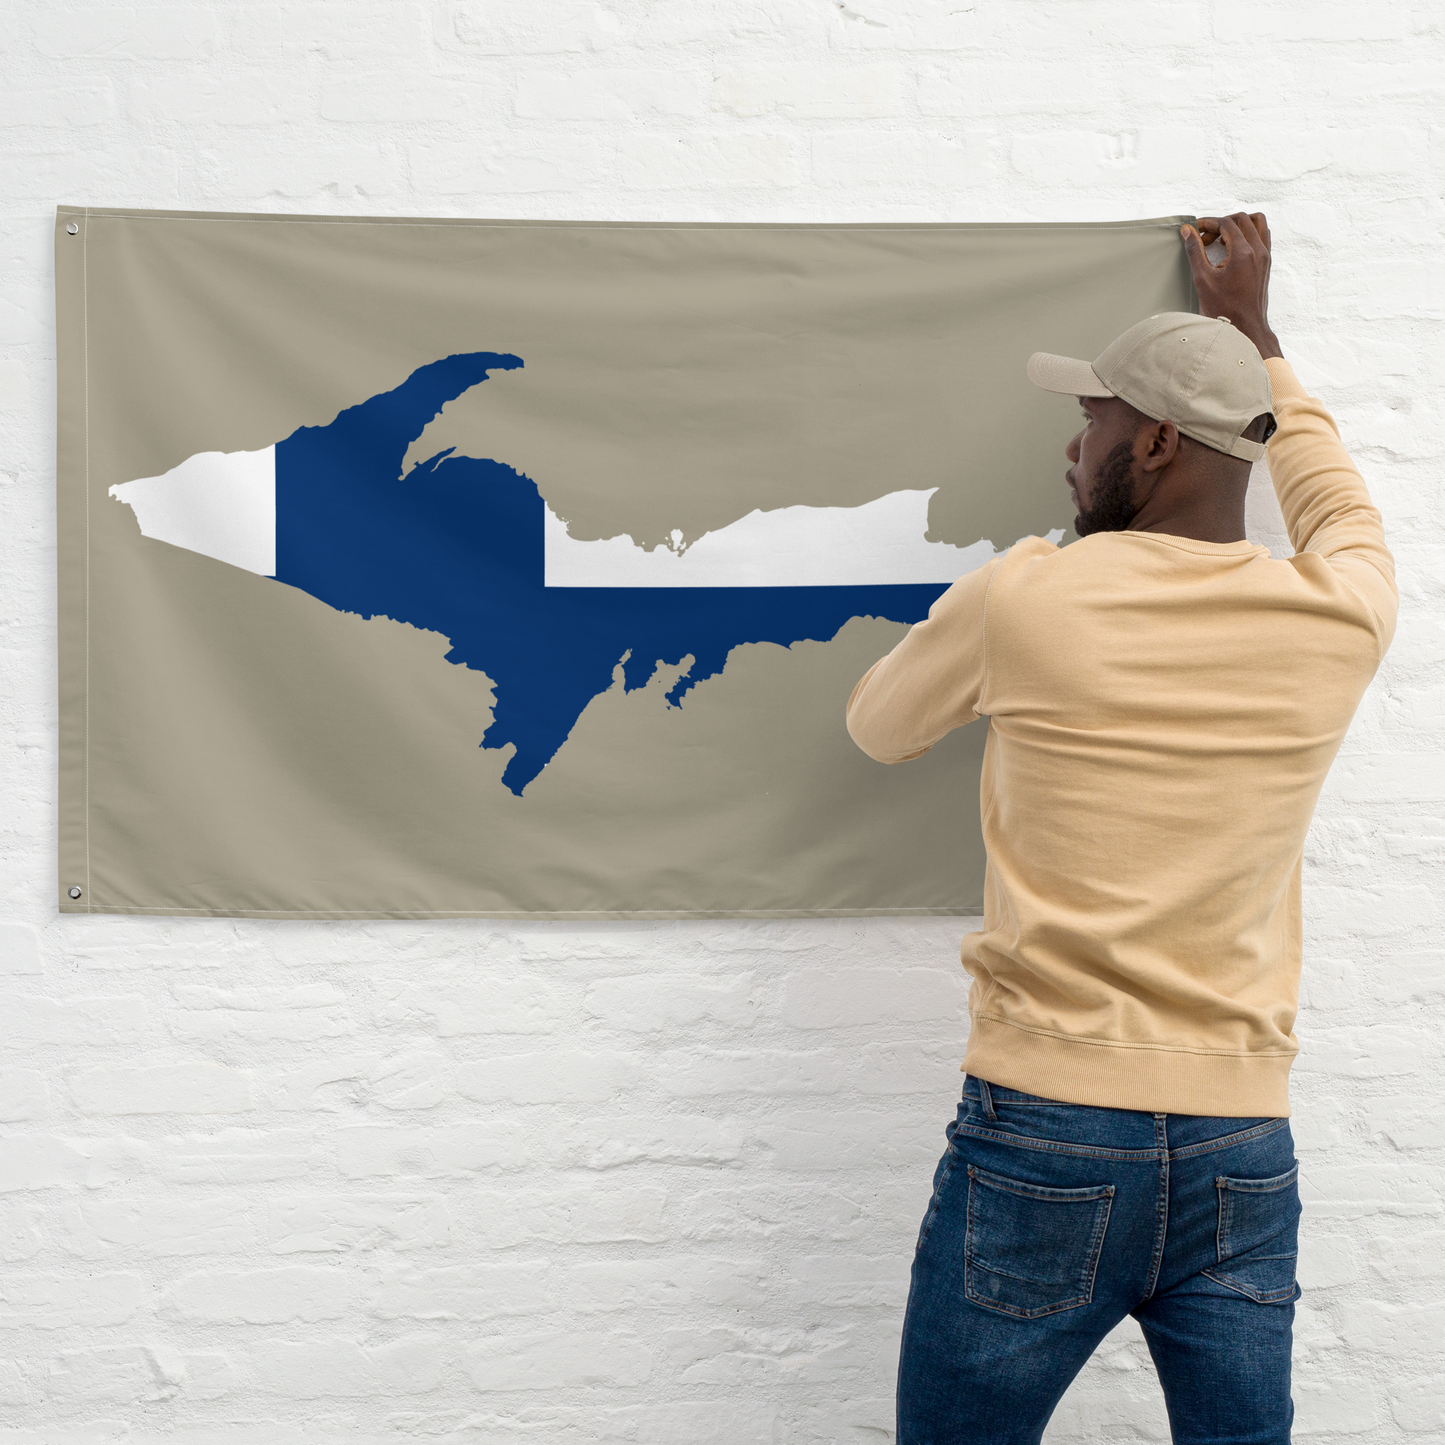 Michigan Upper Peninsula Wall Flag (w/ UP Finland Flag) | Petoskey Stone Beige